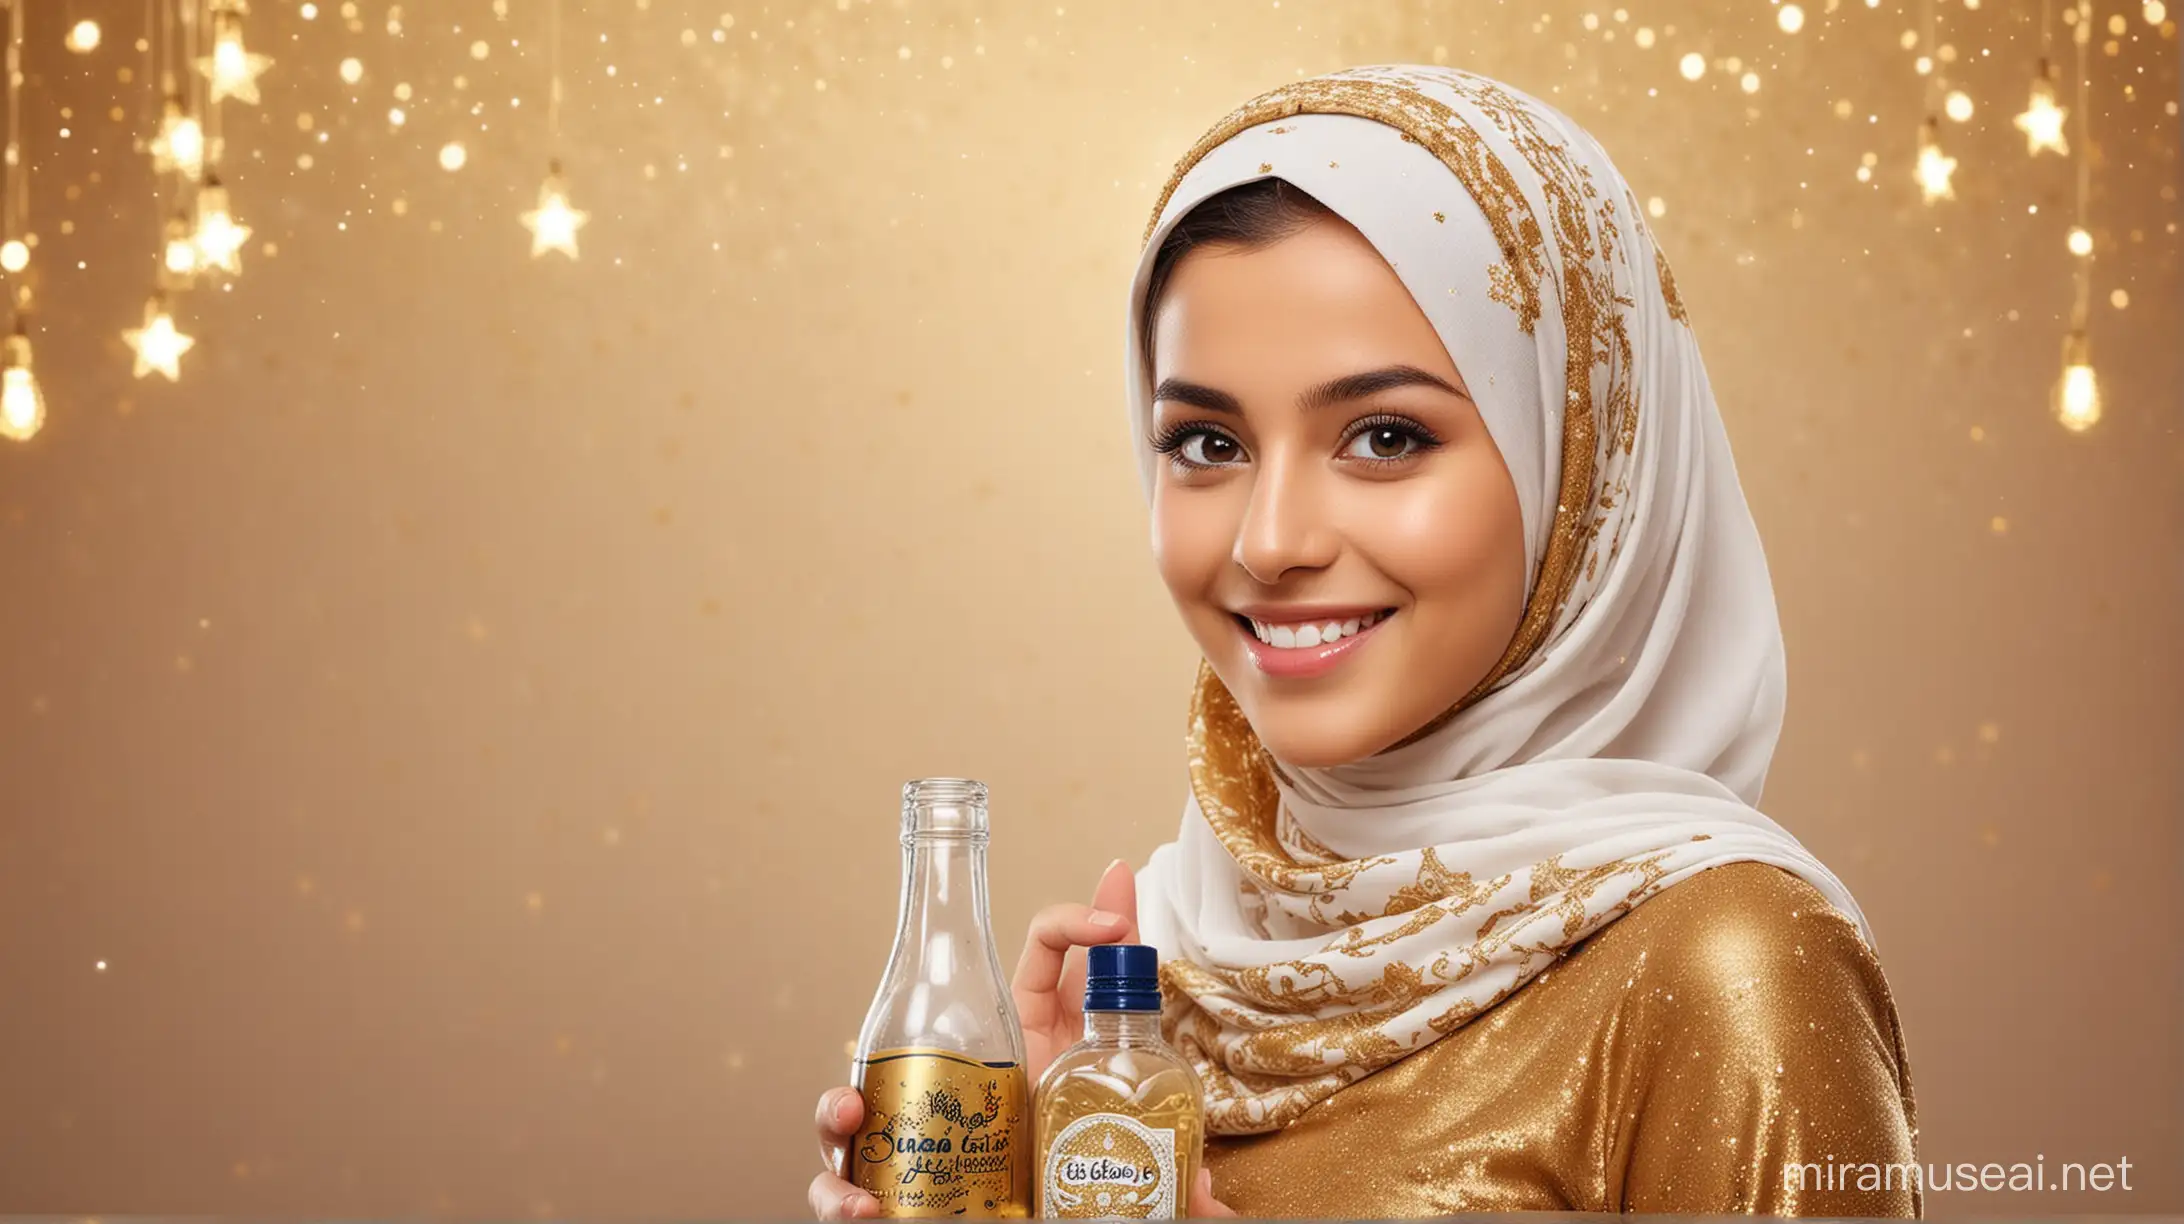 Joyful Muslim Girl Celebrating Eid Festival with Sparkling Background